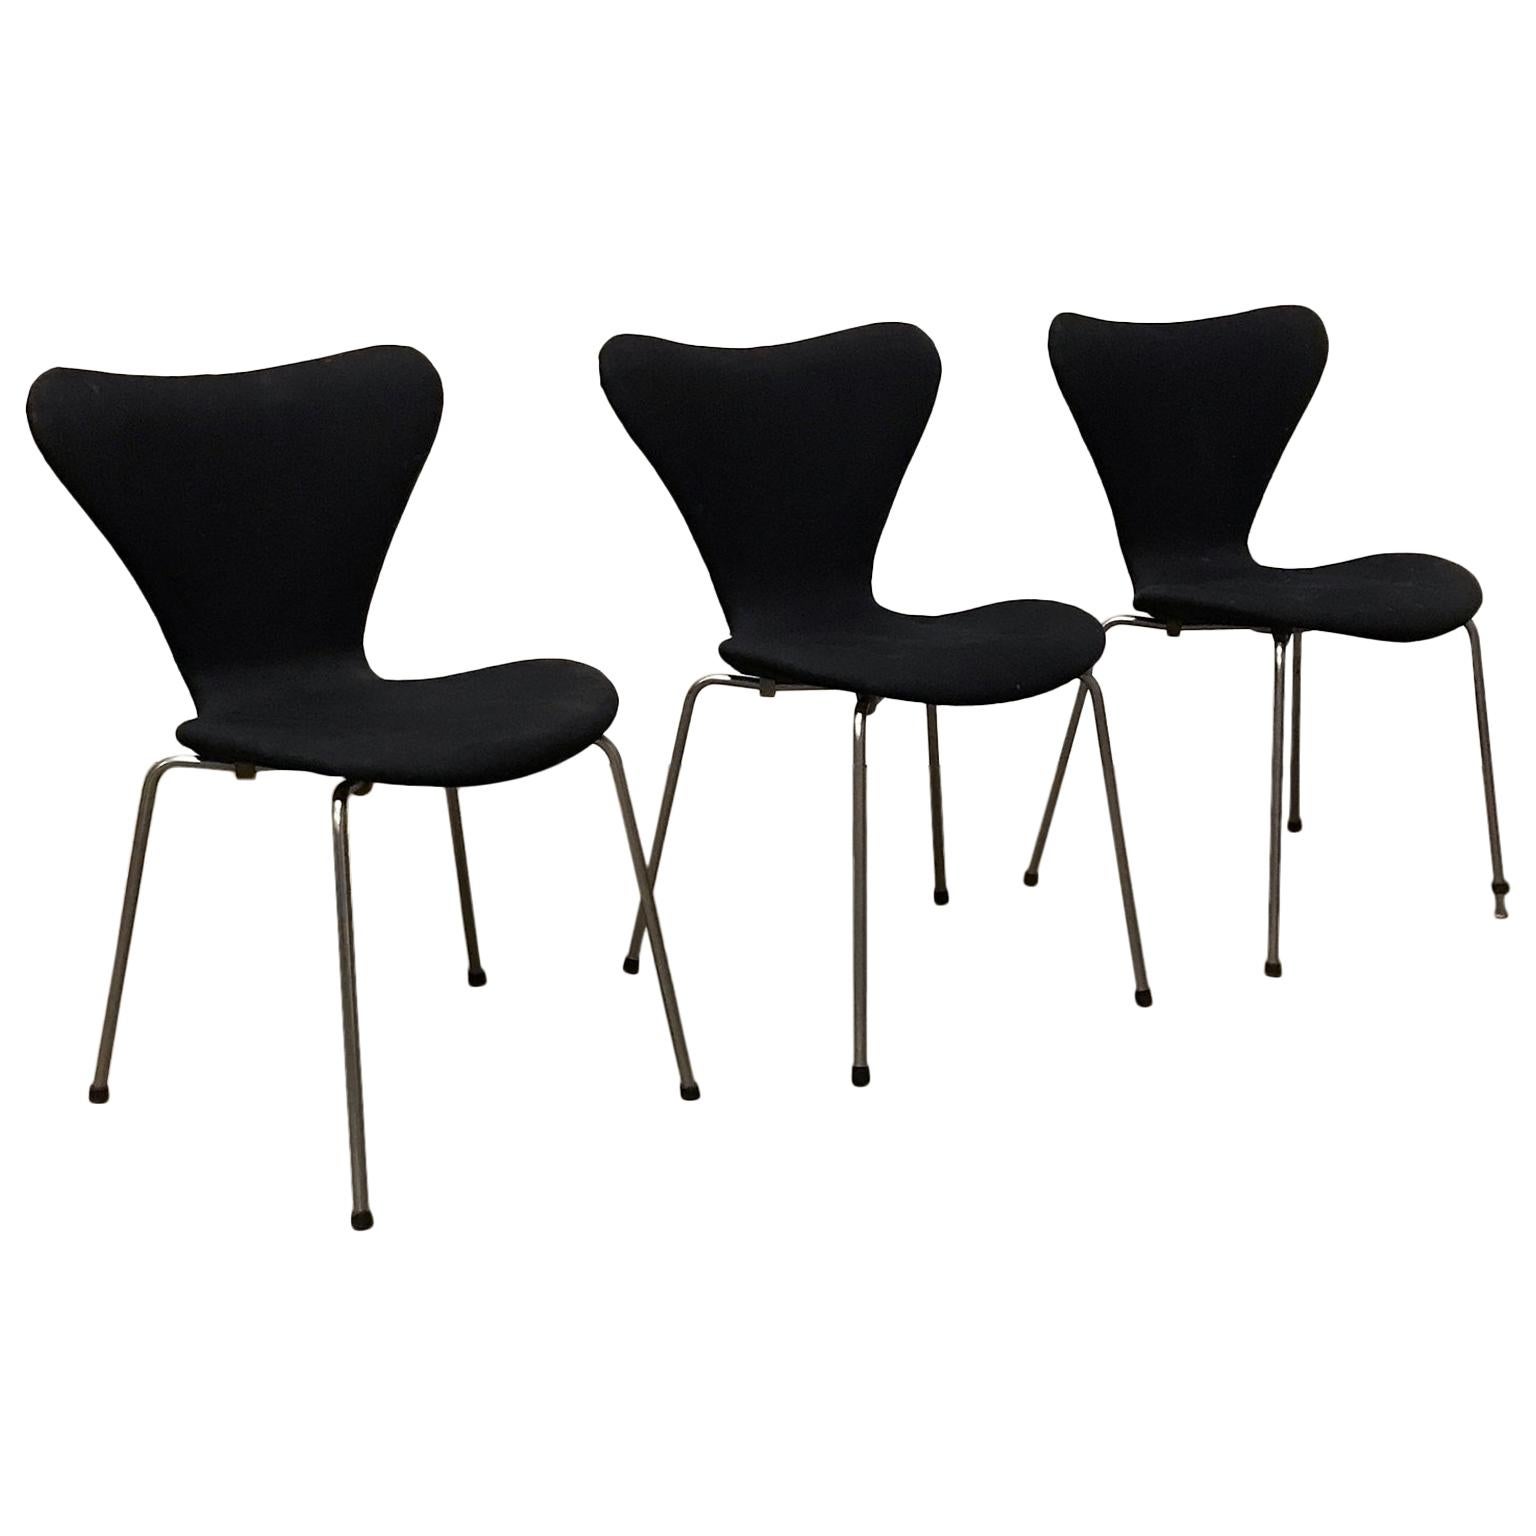 1955, Arne Jacobsen, Fritz Hansen, Set 3107 Butterfly Chairs in Black Upholstery